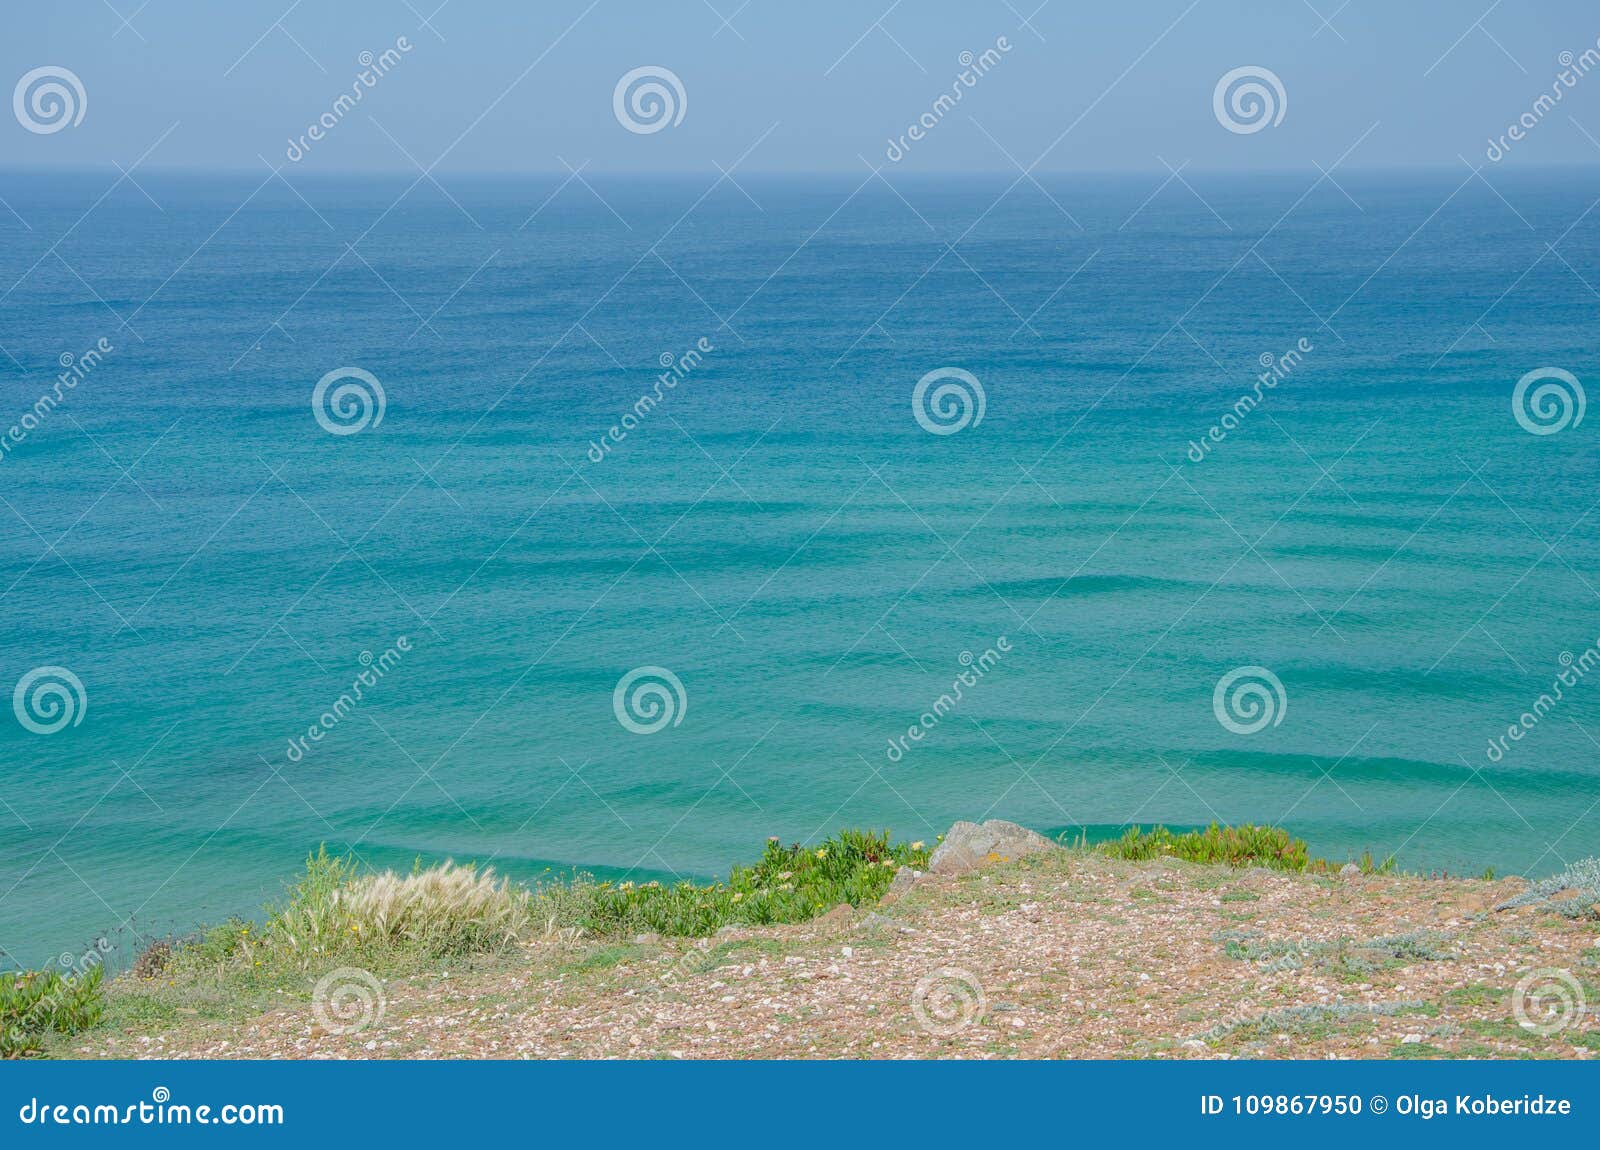 turquoise ocean near odeceixe, portugal.